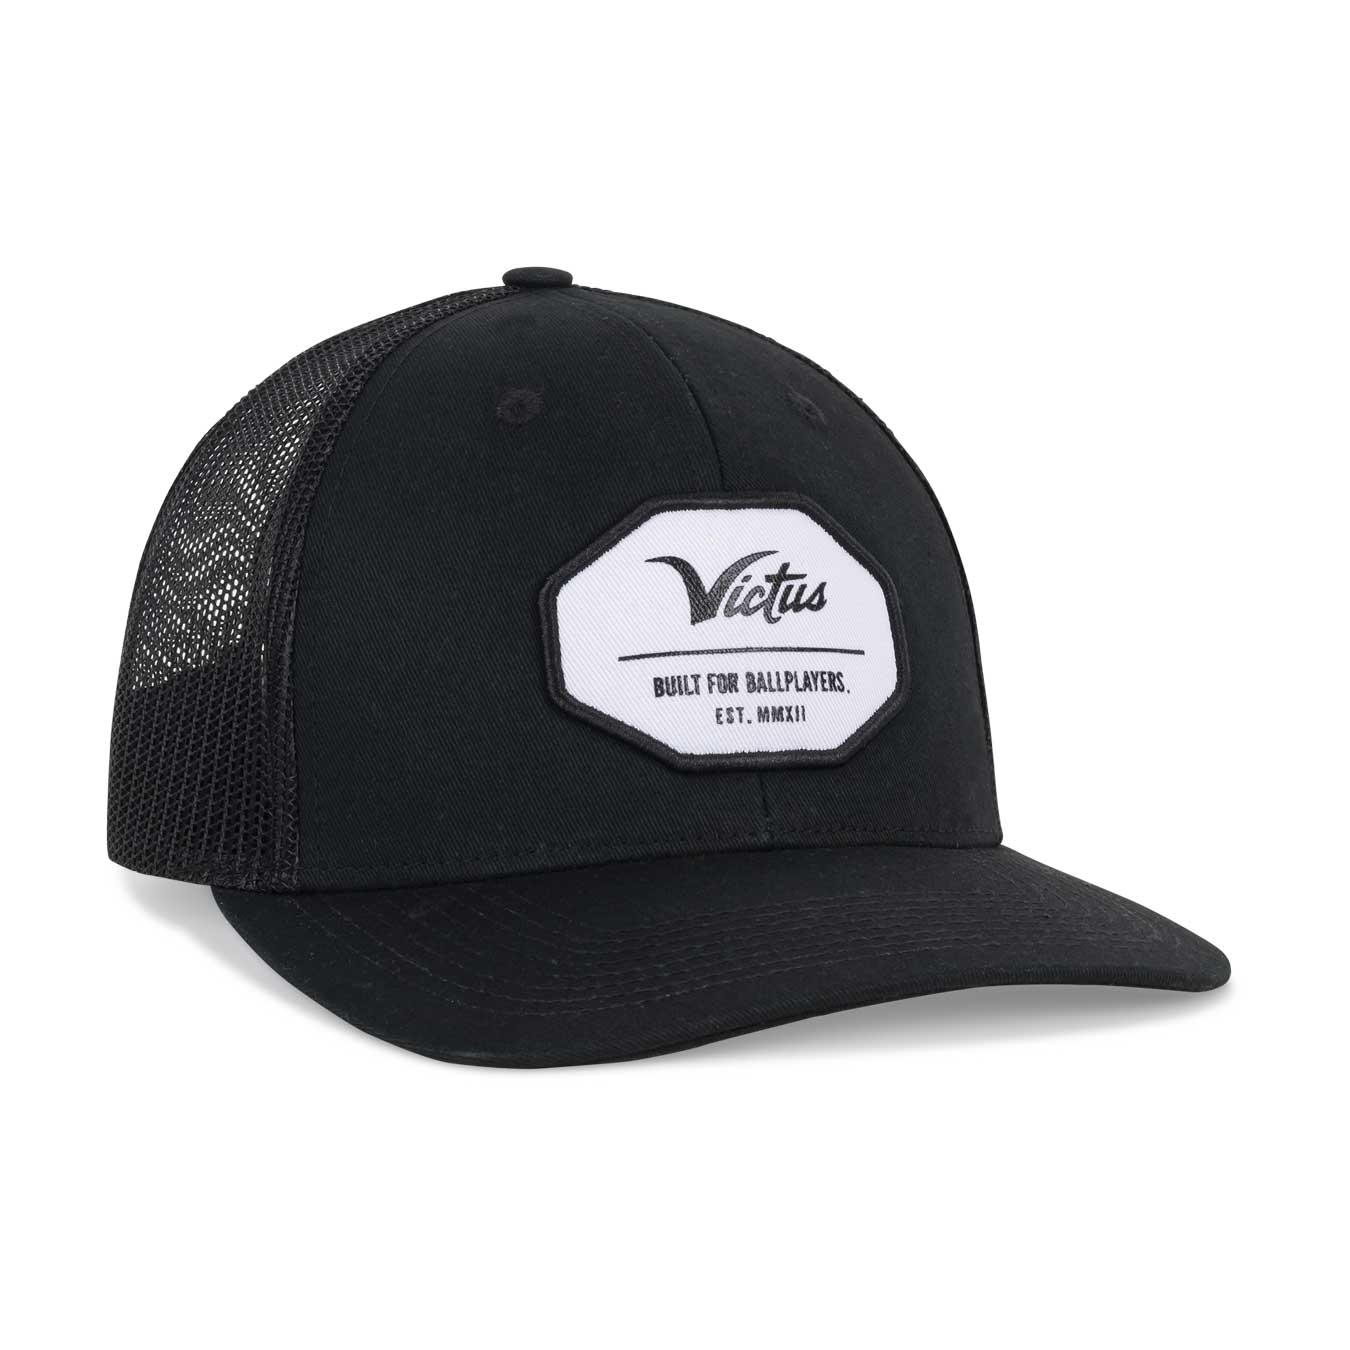 Victus "Built For" Snapback Trucker Hat